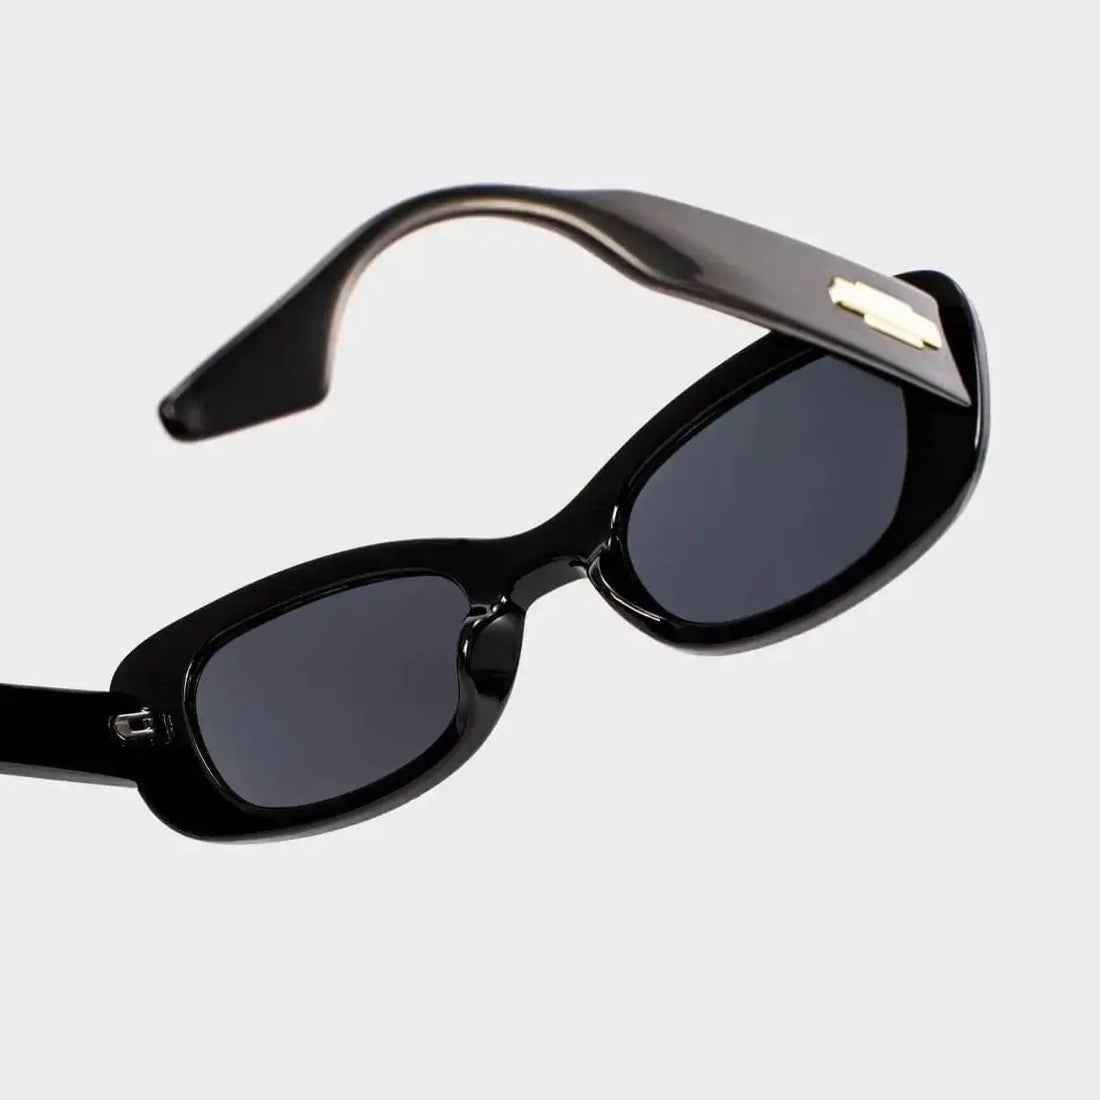 Dakota Johnson Fashion Sunglasses Madison Avenue Sunglasses 